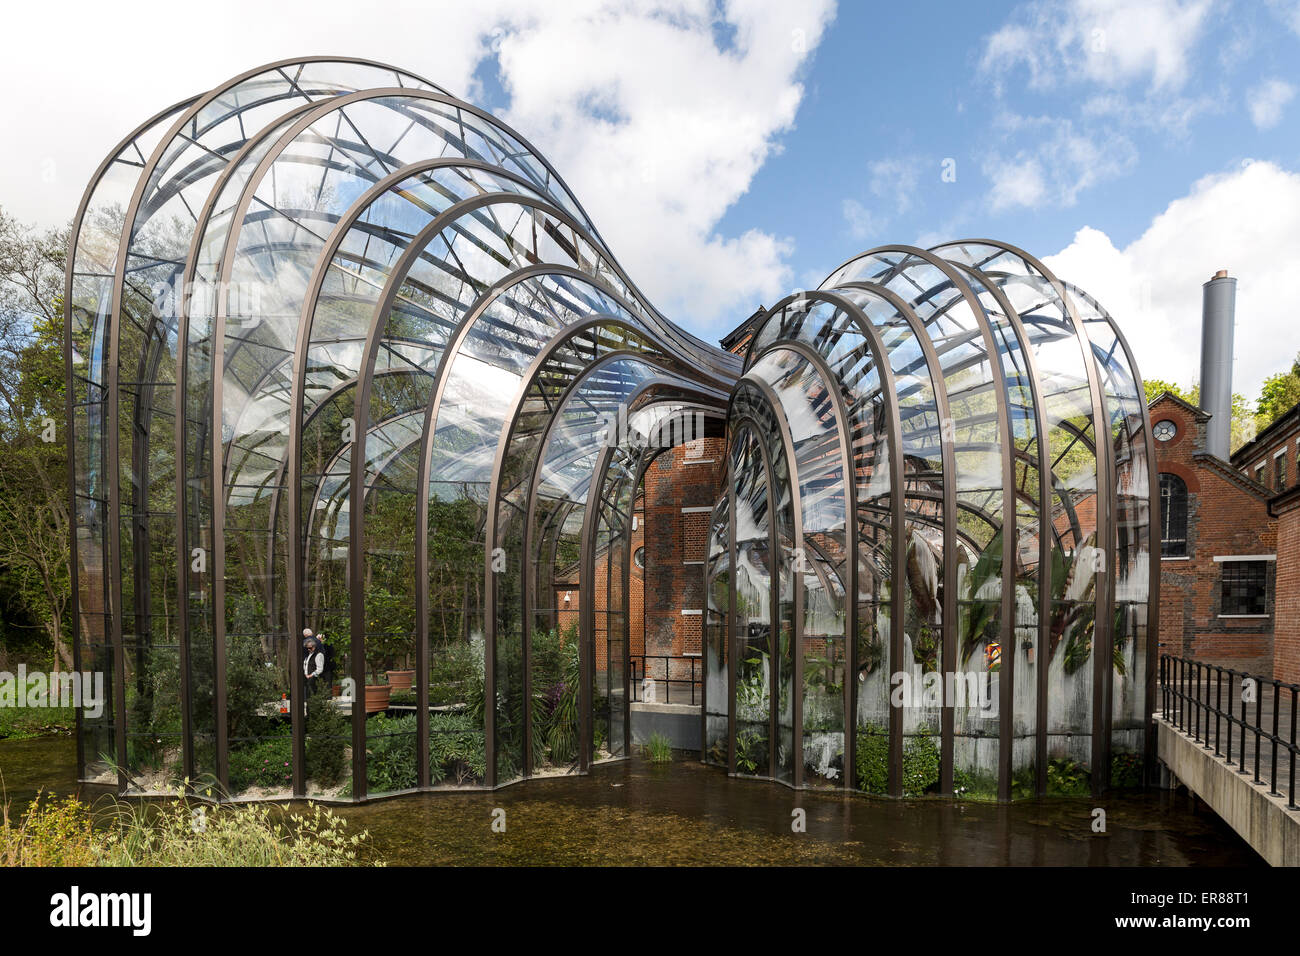 Botanical Glasshouses, Bombay Sapphire Distillery Visitor Centre, Laverstoke, Hampshire, England, UK. Stock Photo